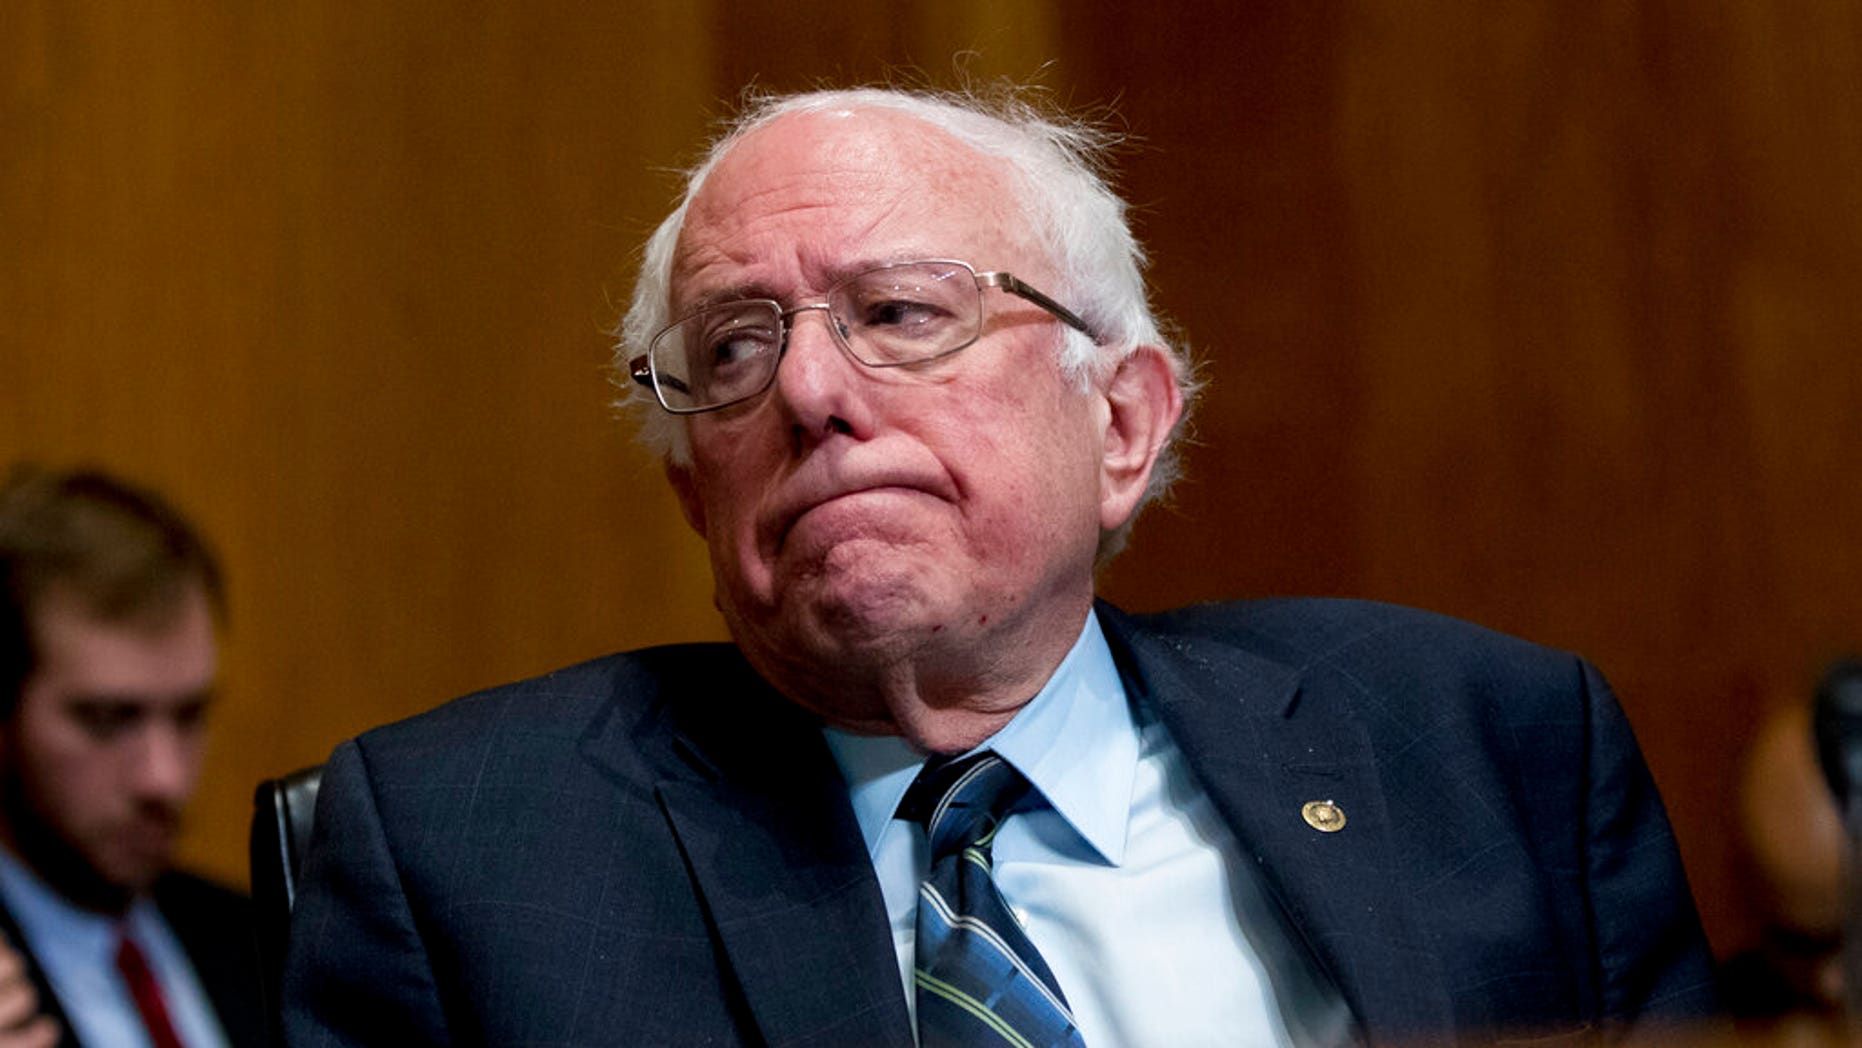 Senator Bernie Sanders said he did not need Hillary Clinton's advice to organize a campaign. (AP Photo / Andrew Harnik)